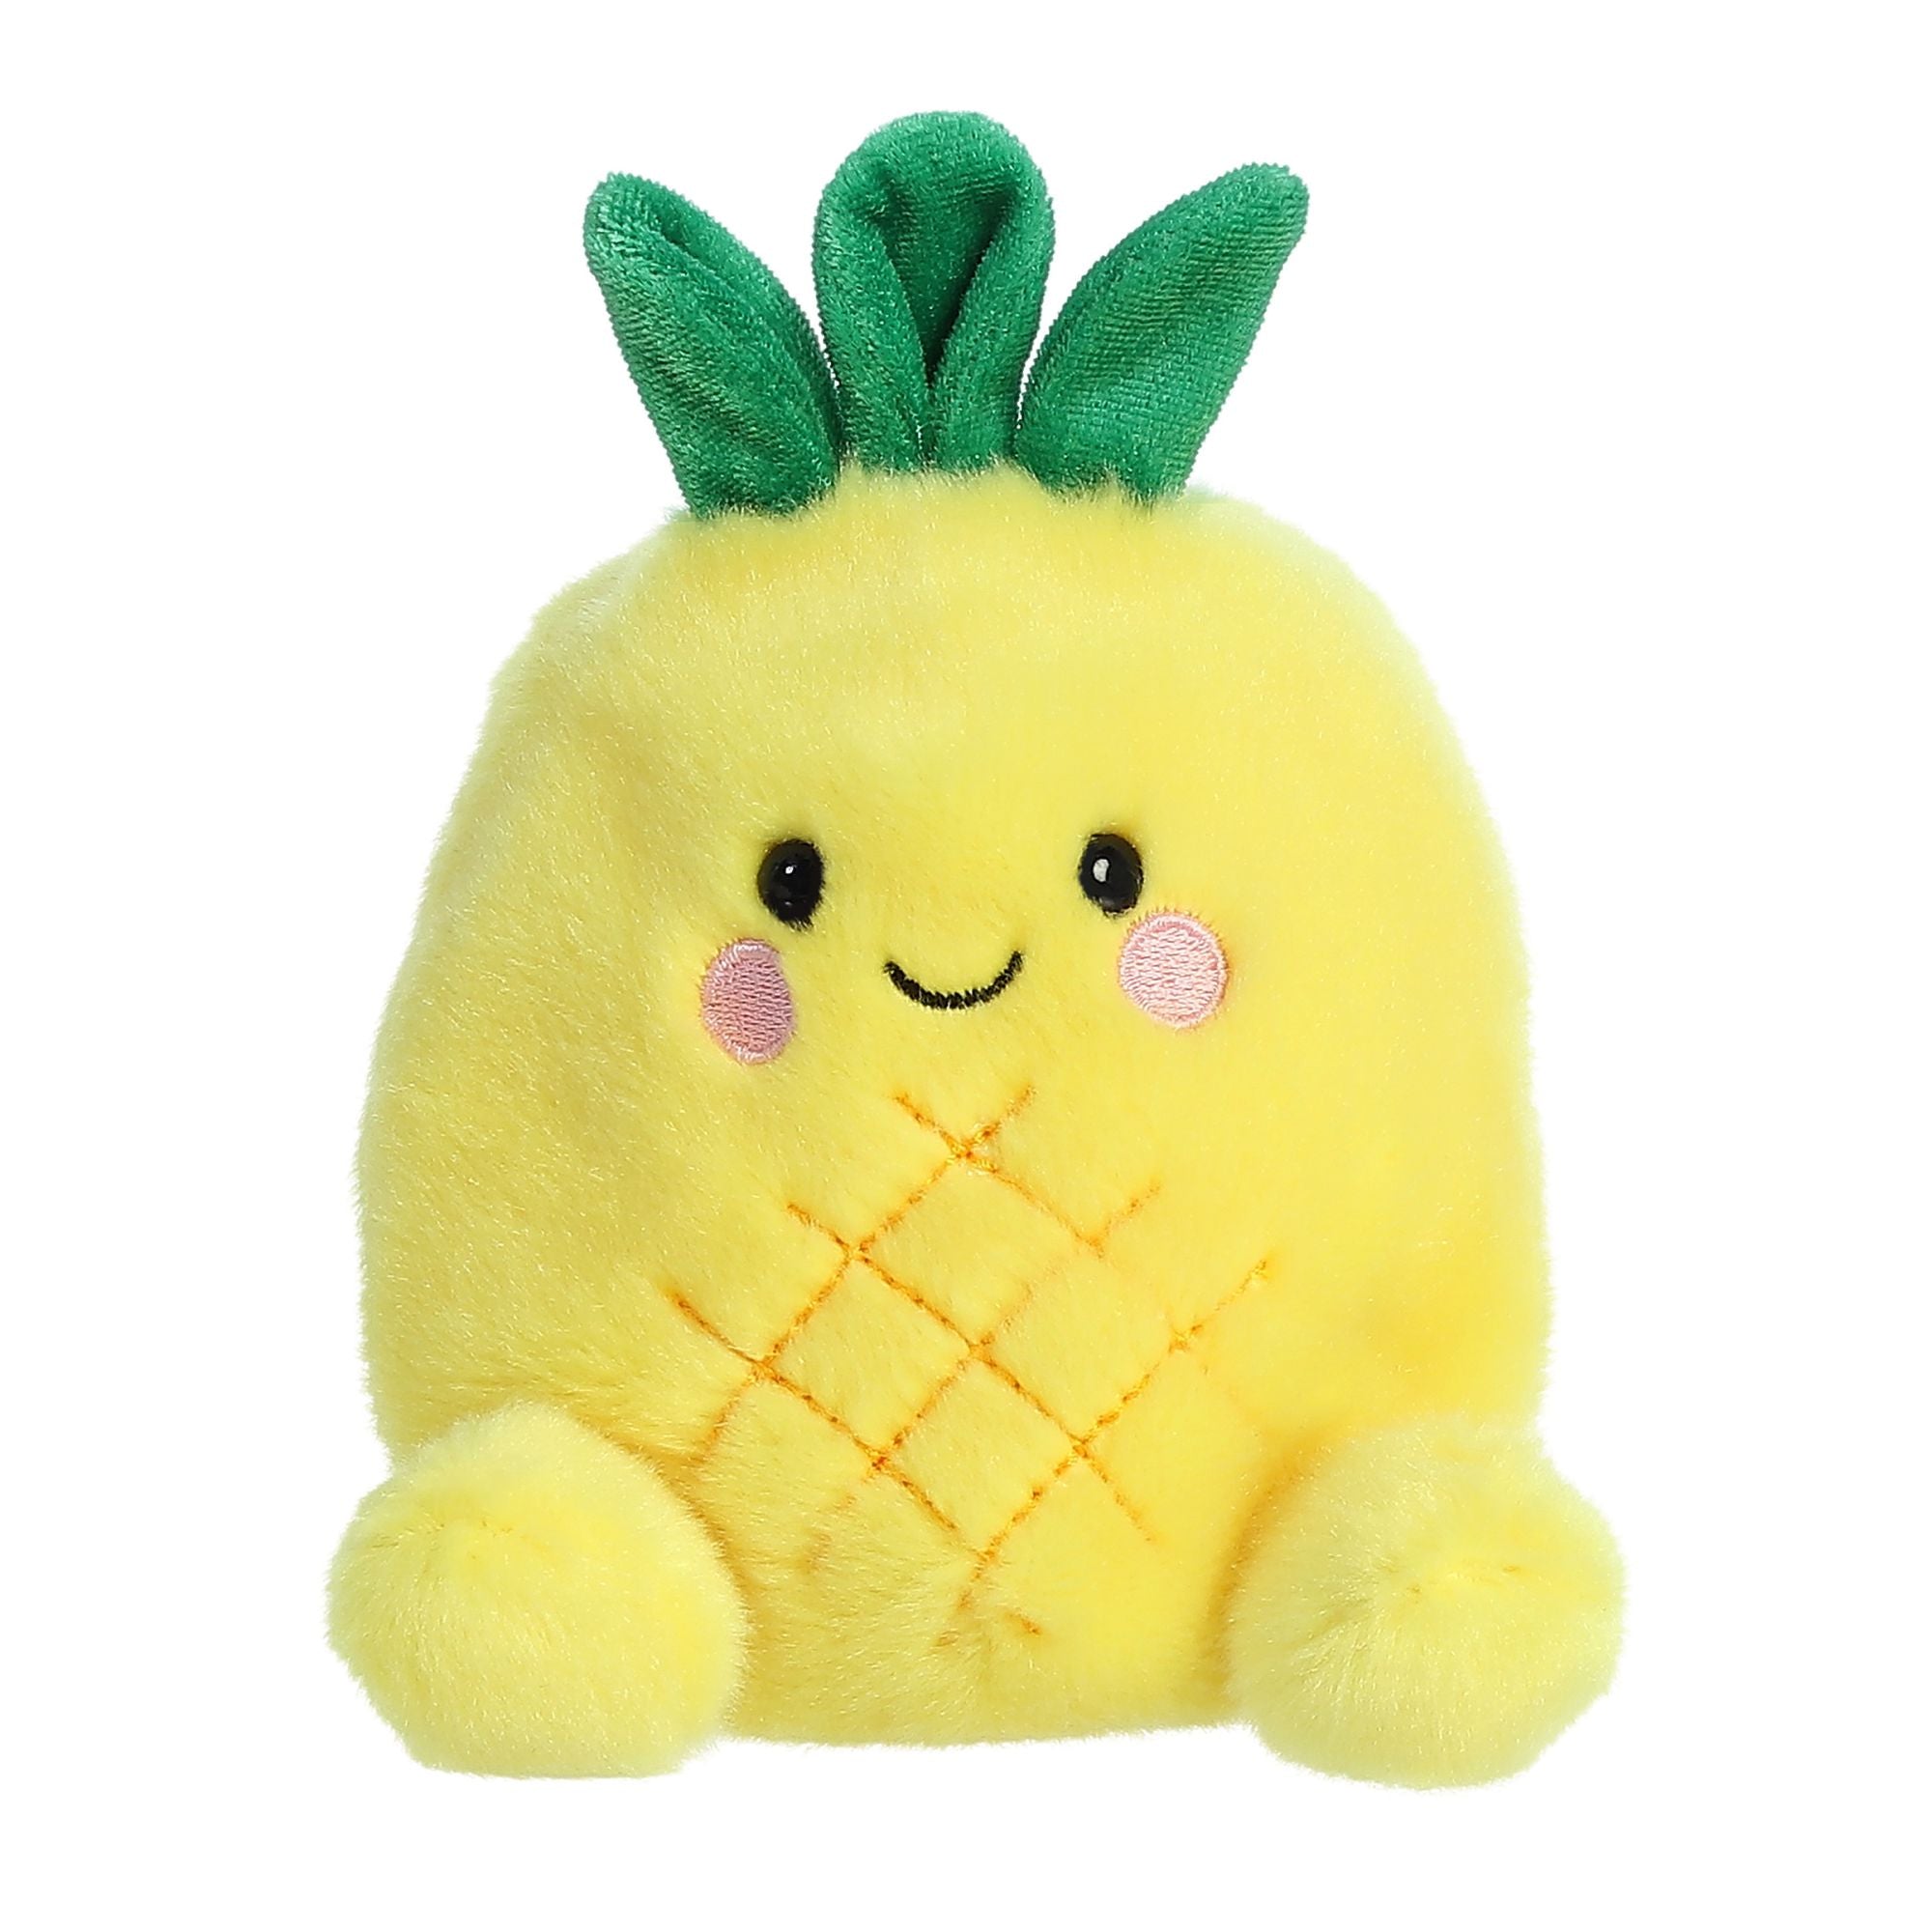 Perky Pineapple™